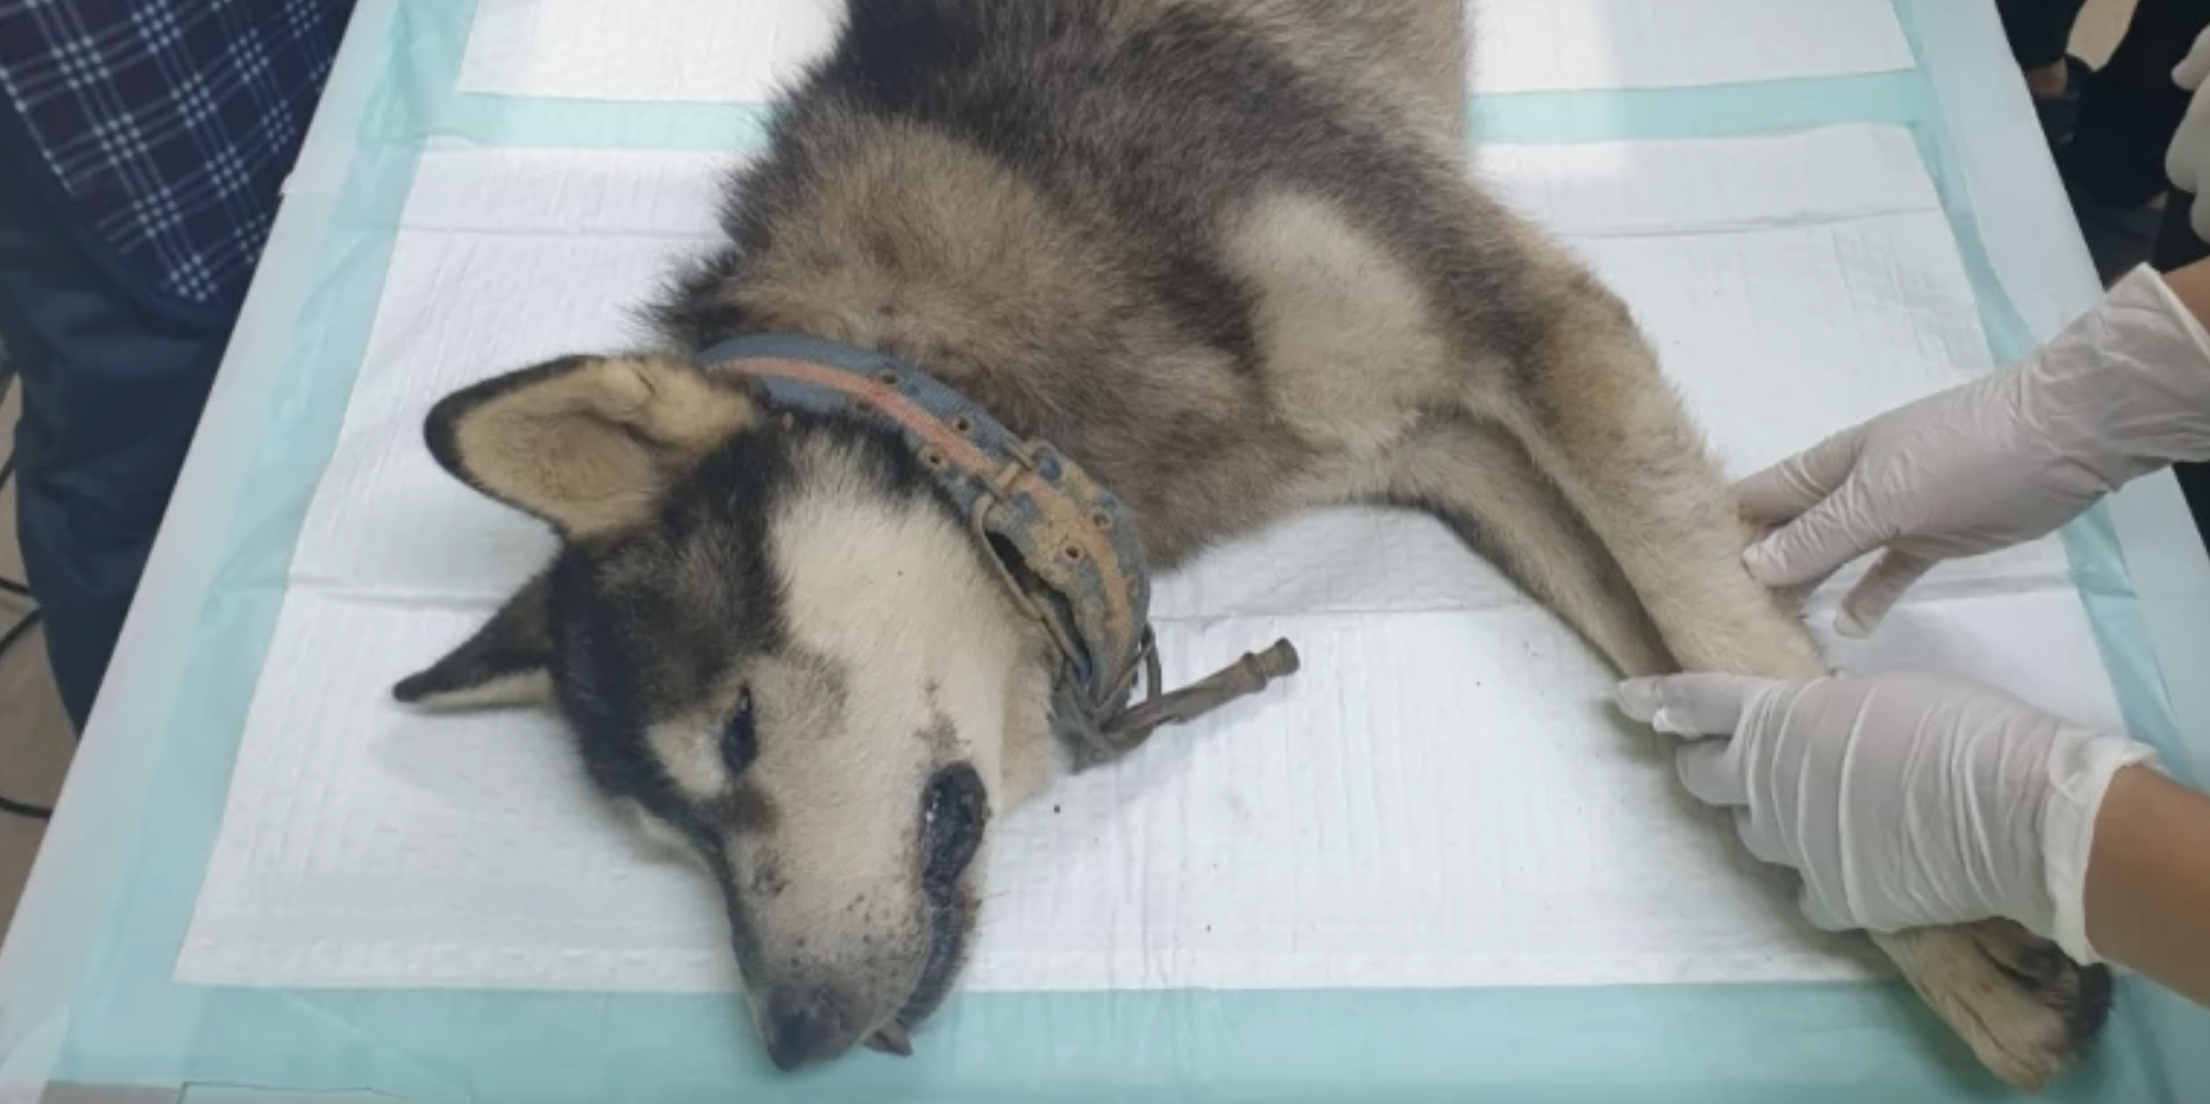 Hero dog's death reignites debates on animal cruelty | Inquirer News